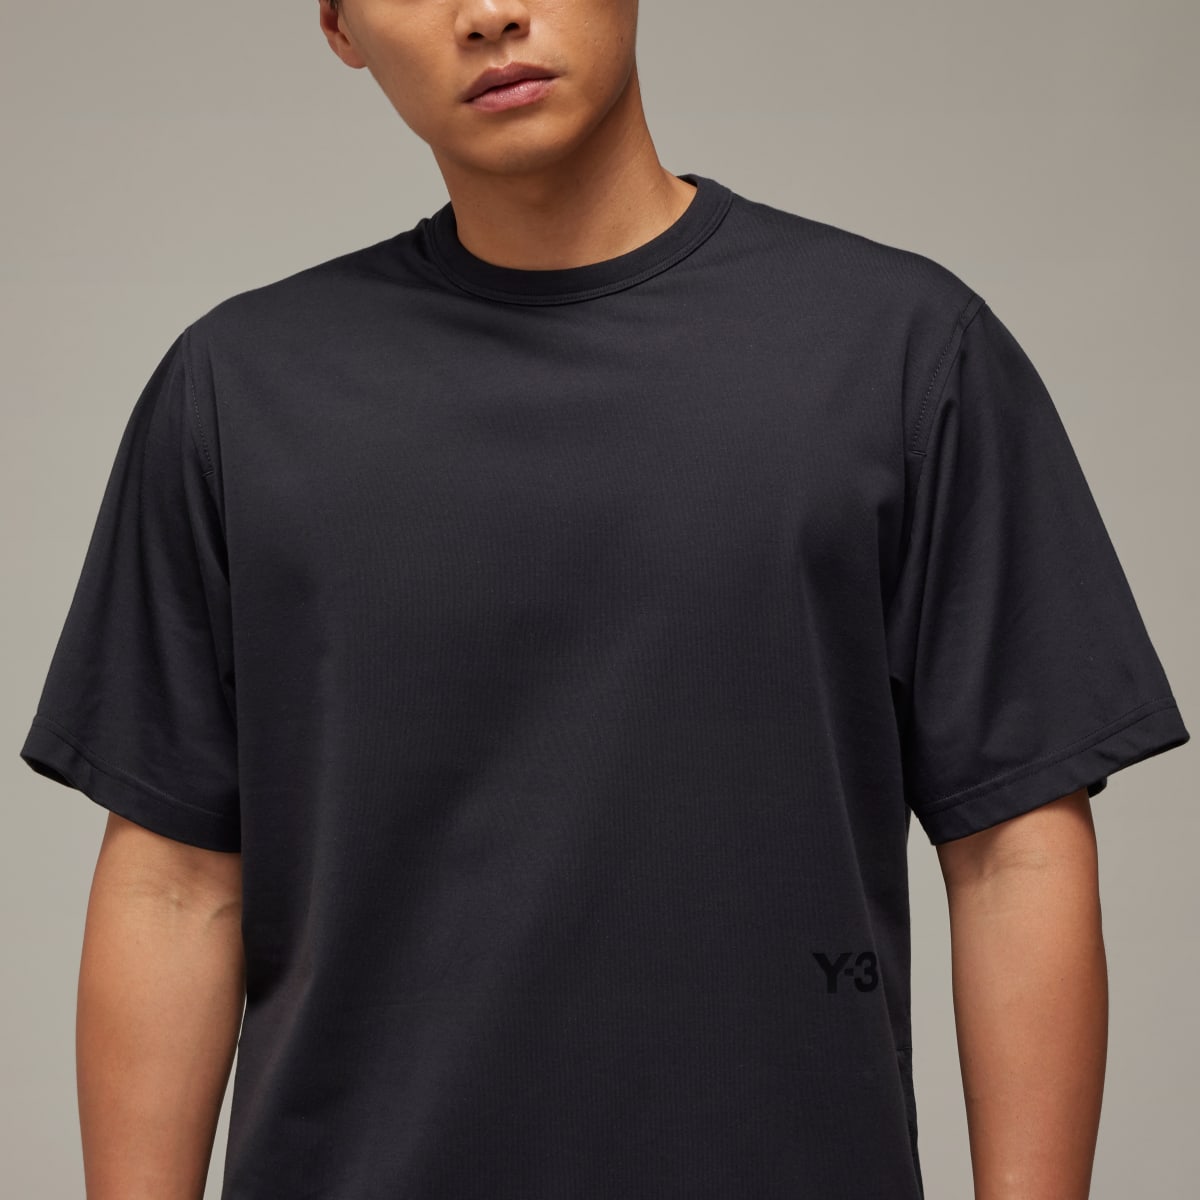 Adidas T-shirt Premium Y-3. 8